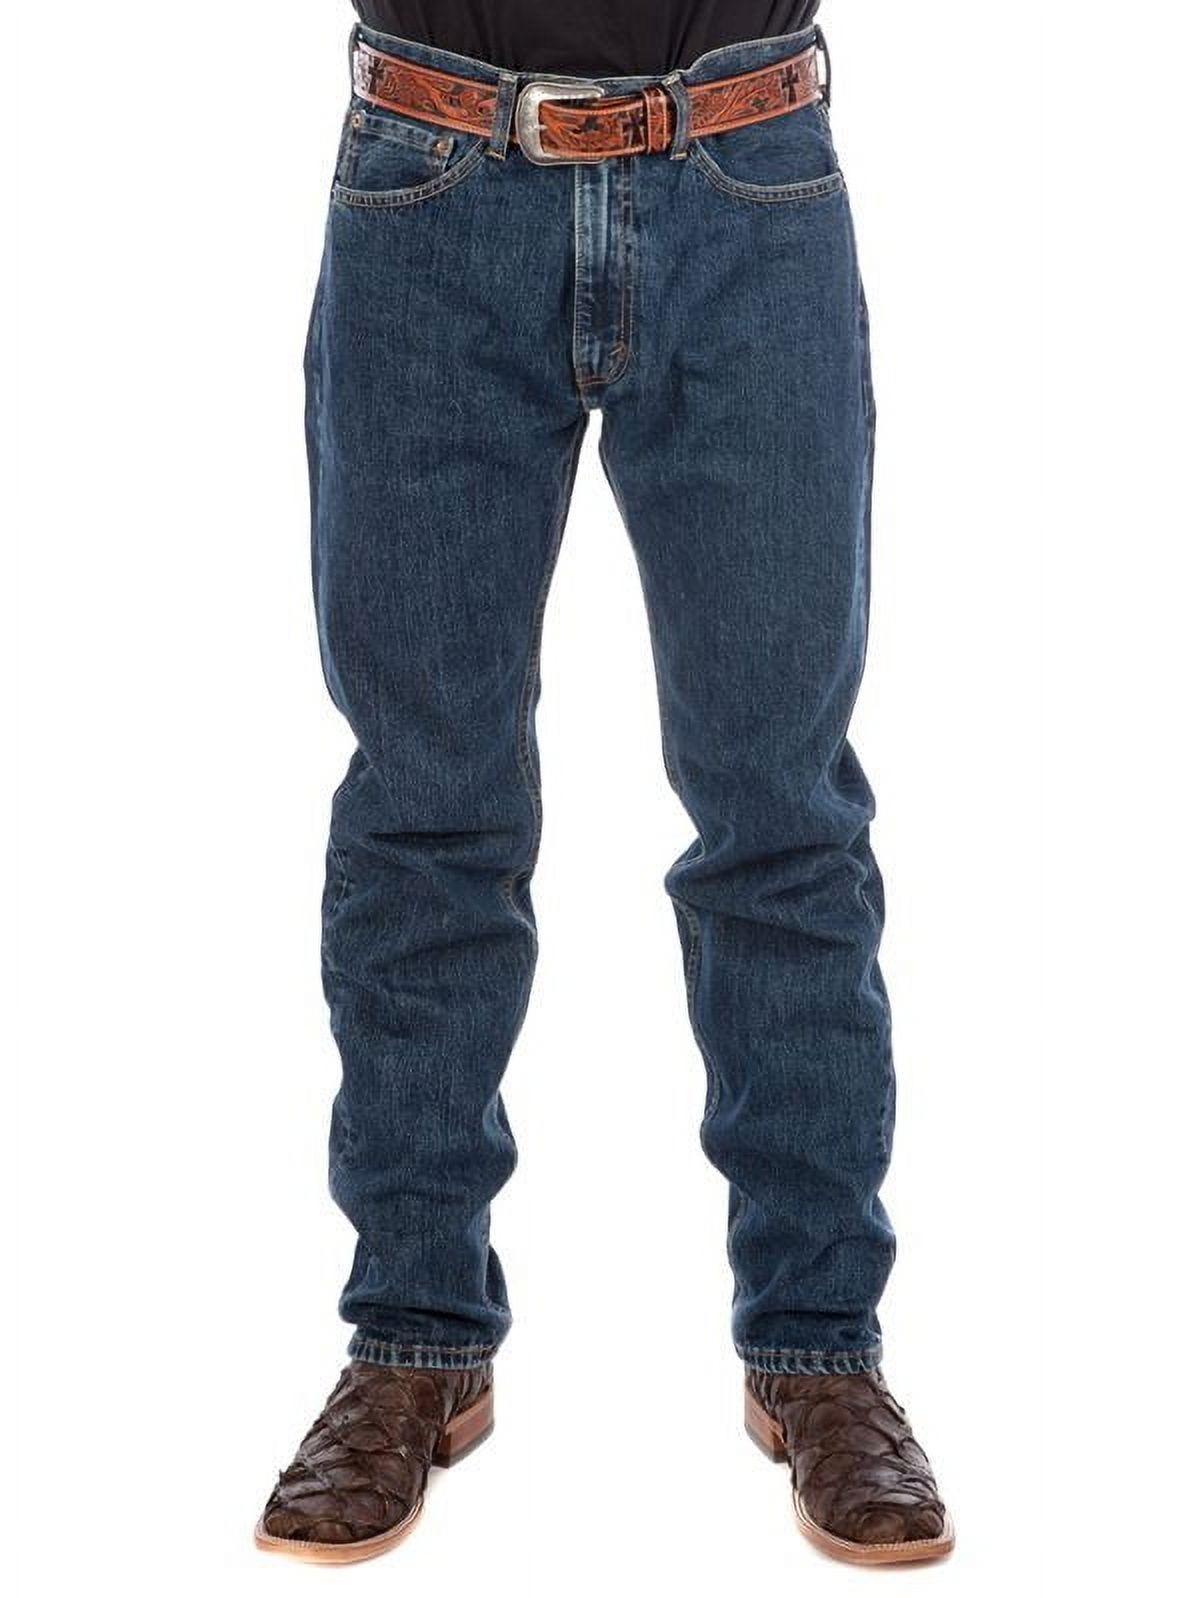 Levi's Men's 505 Regular Fit Jeans - image 3 of 5